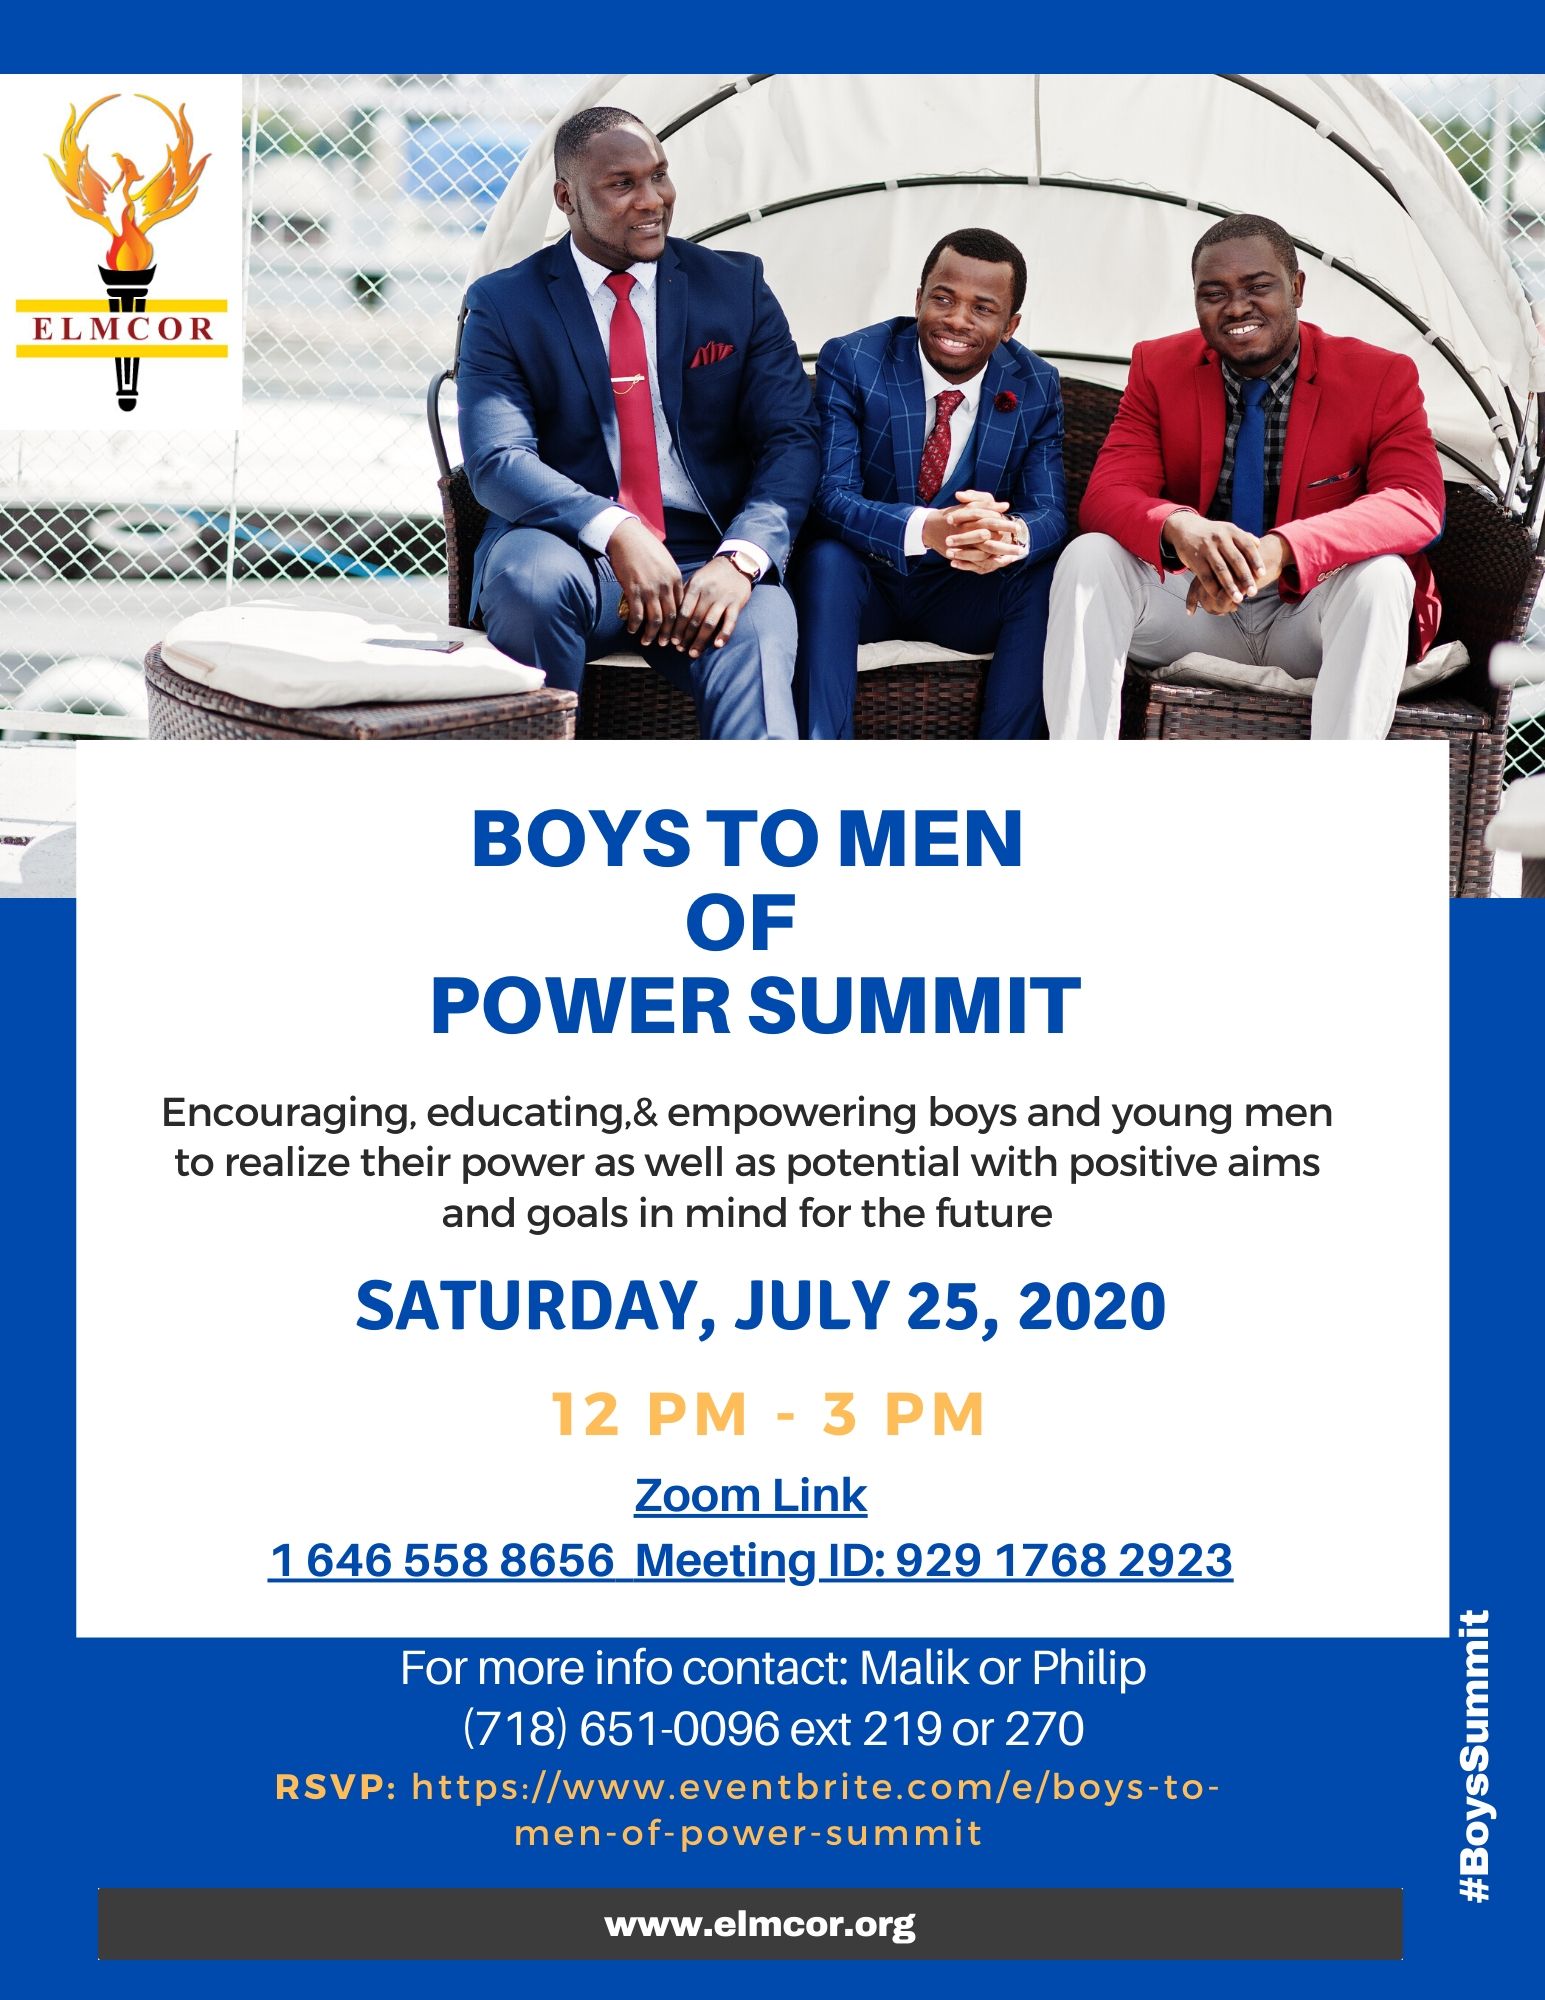 Boys Summit flyer with Elmcor